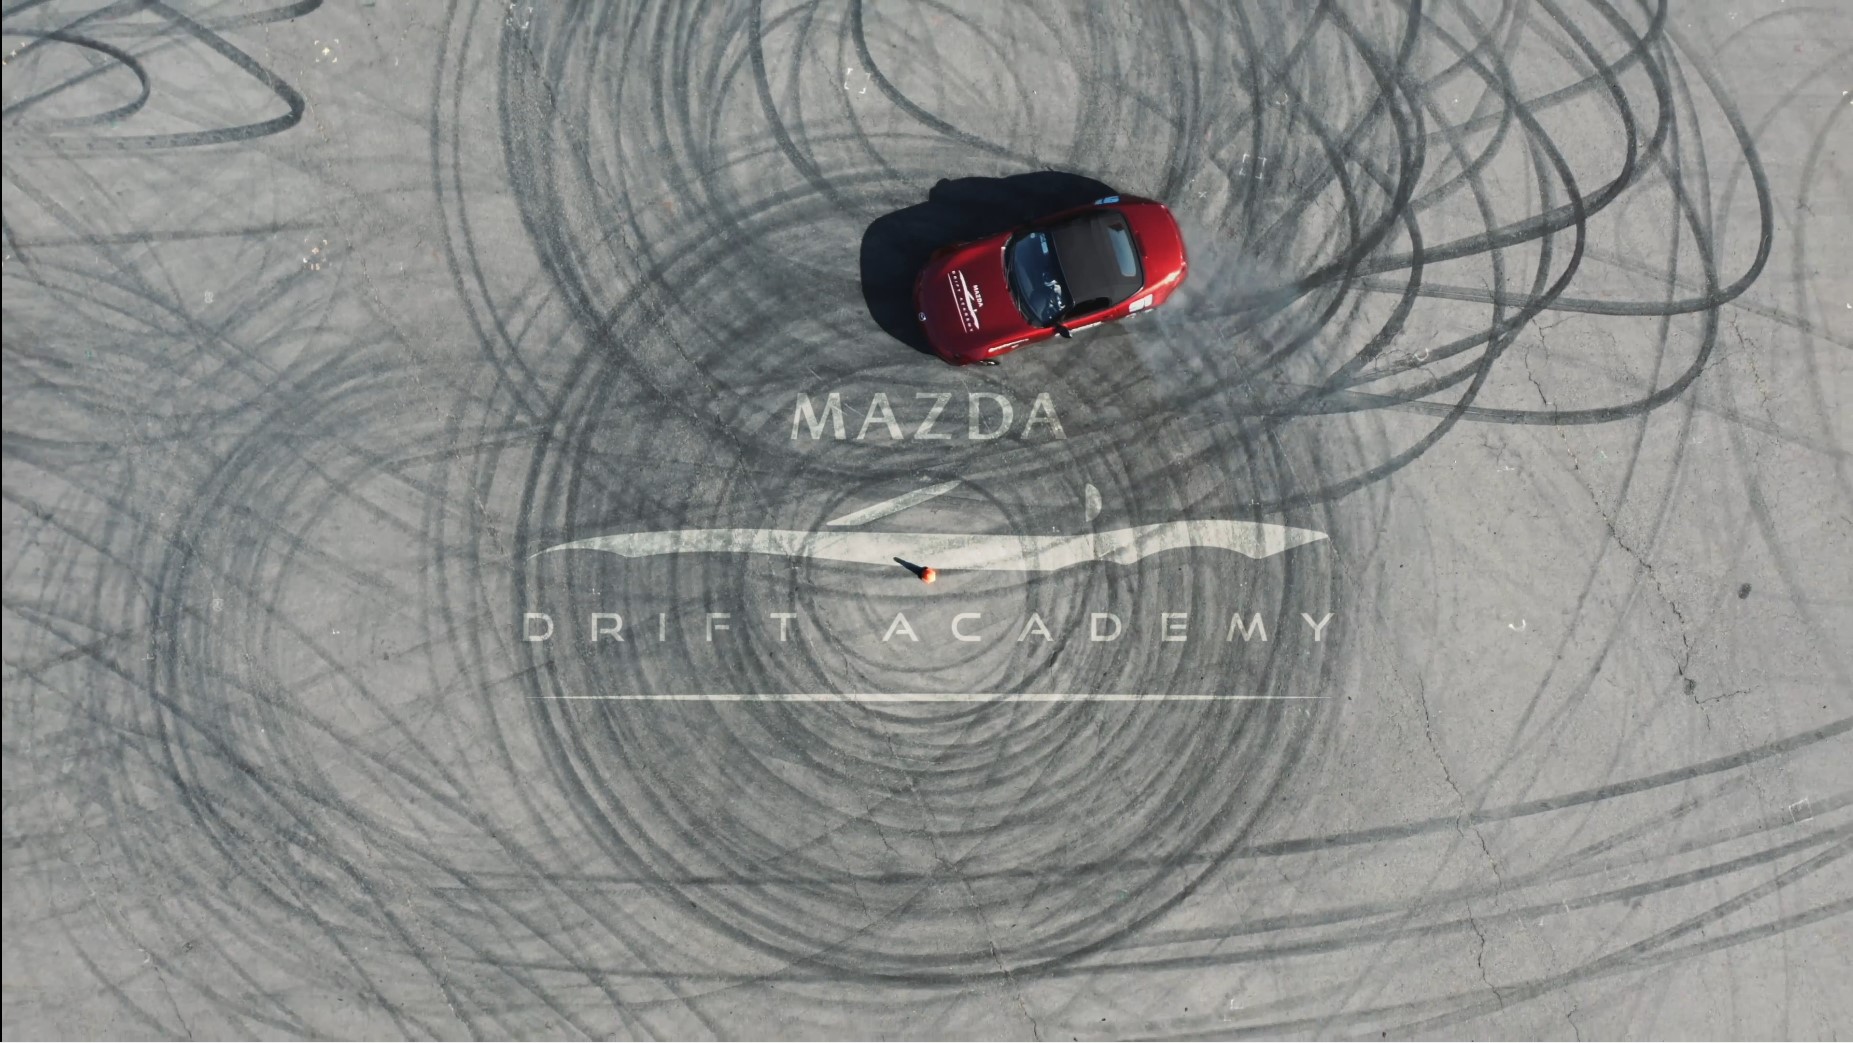 Mazda Drift Academy